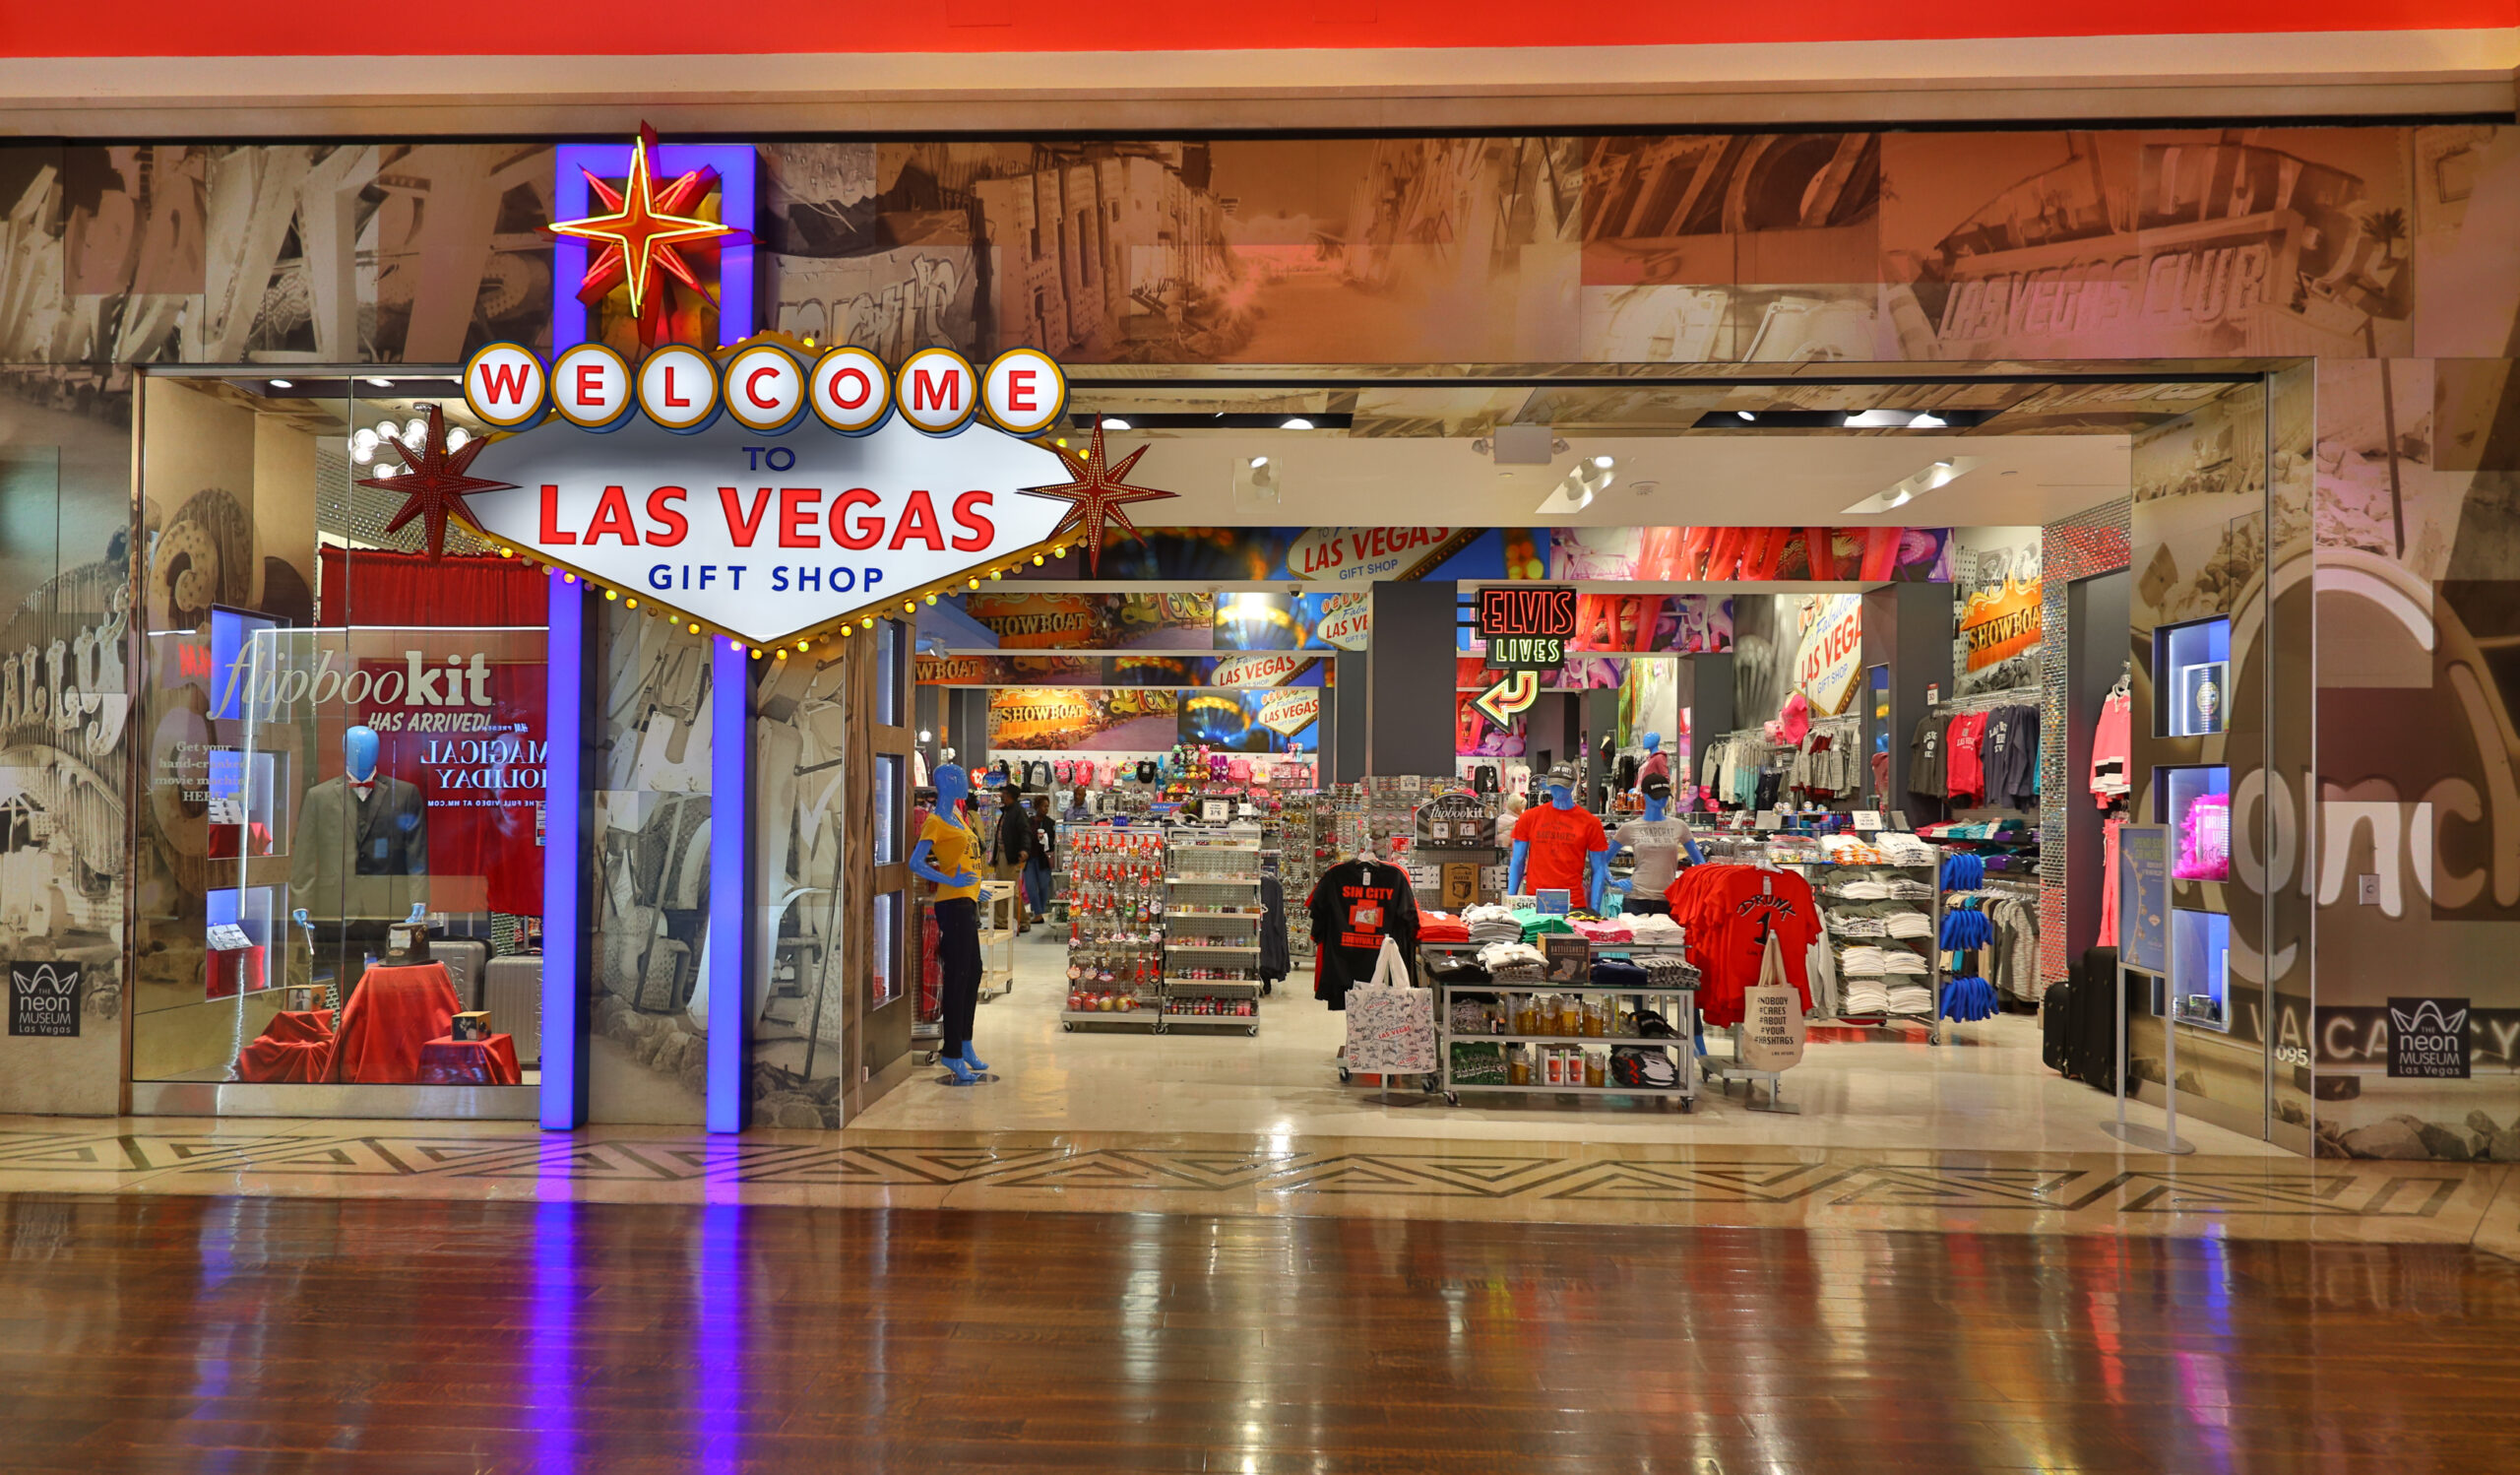 10 Best Gift Shop In Las Vegas 2023 - Buyer's Guide